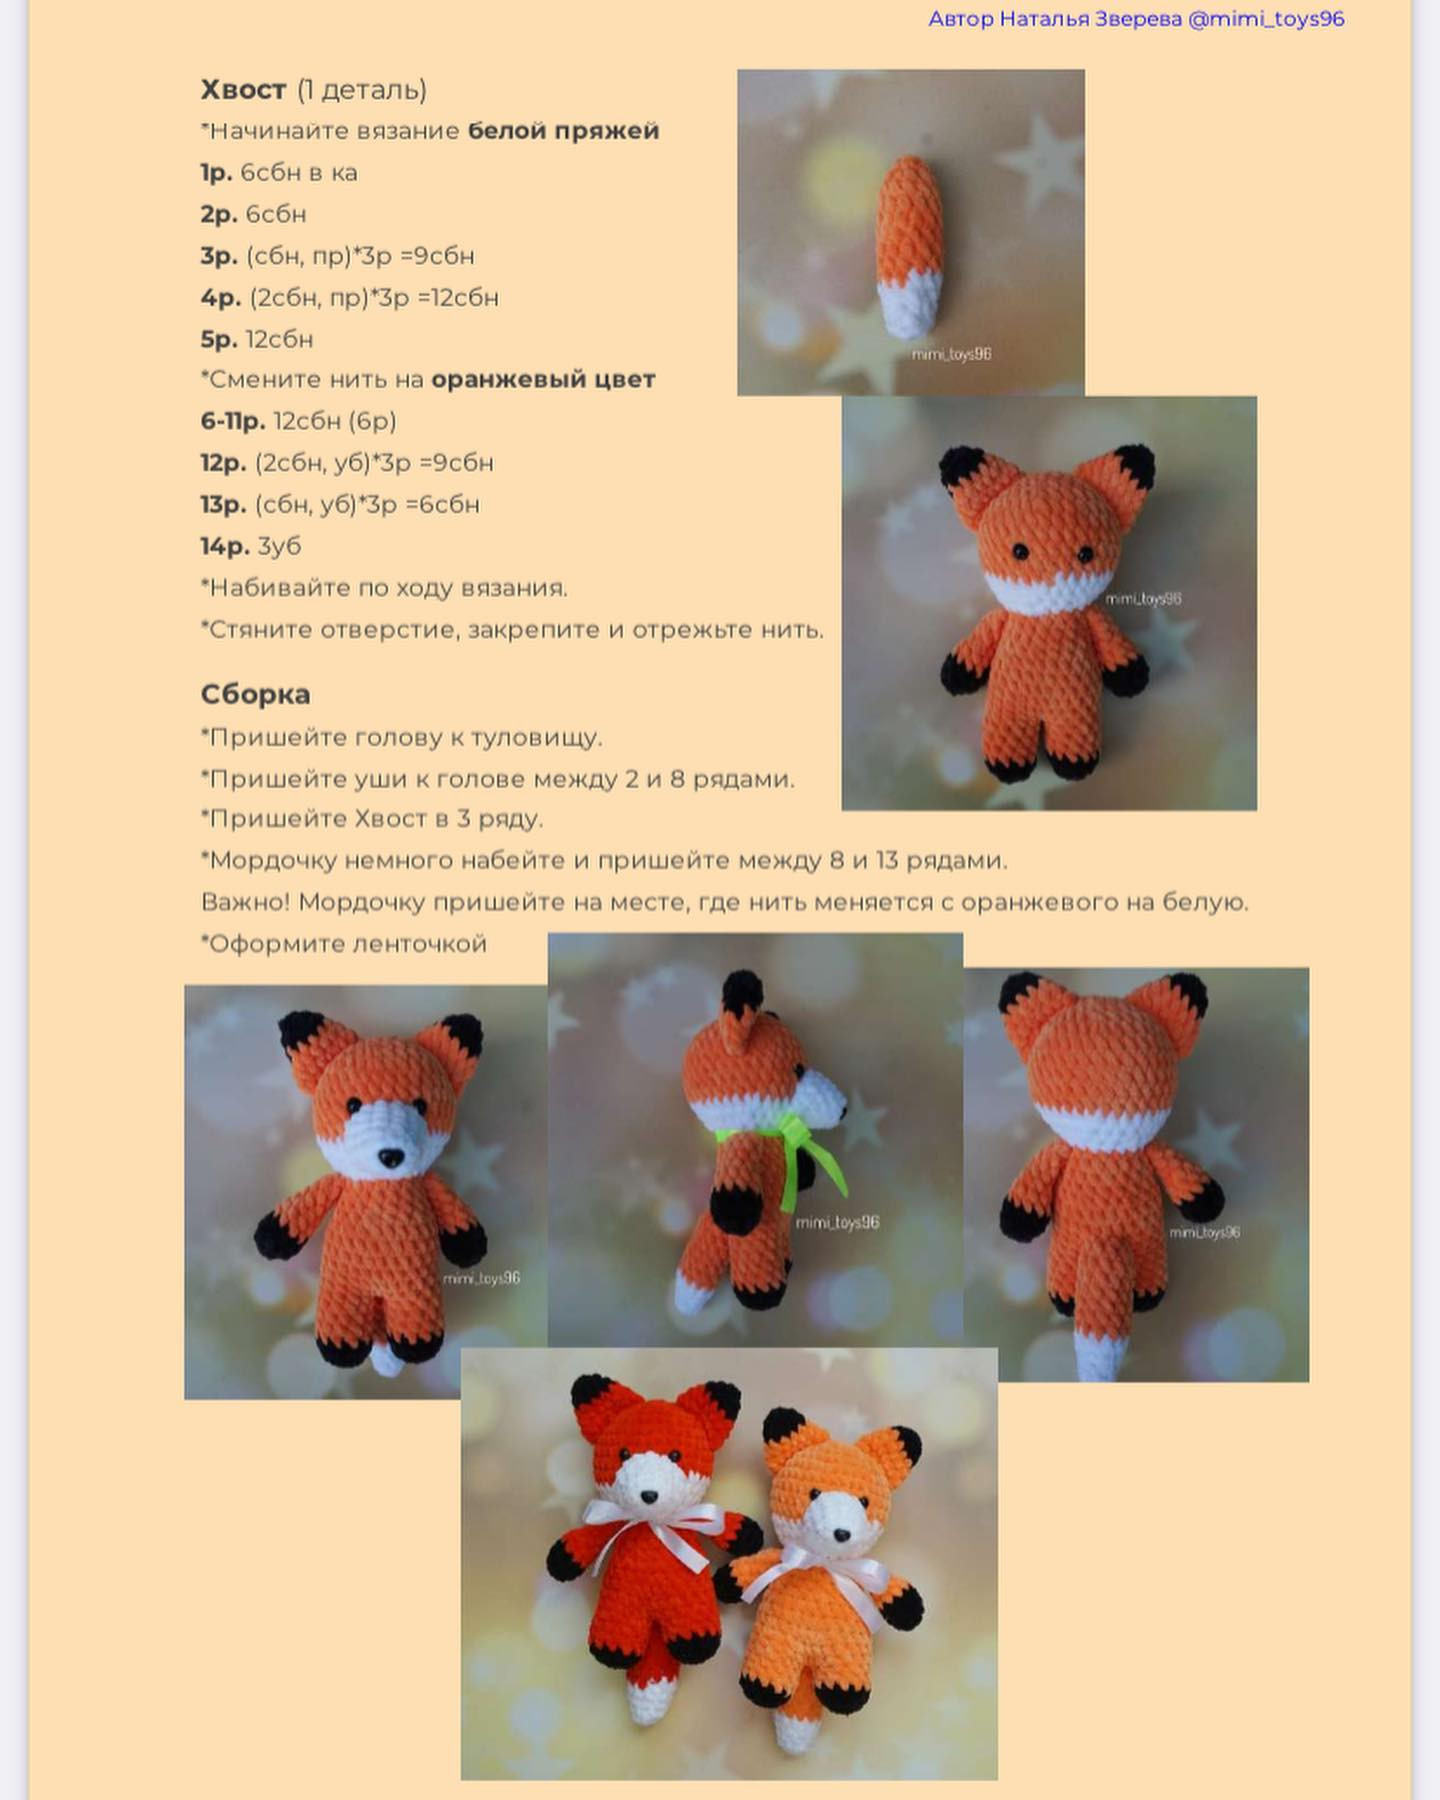 red fox, orange fox, white muzzle, black legs, black hands, moon tail crochet pattern